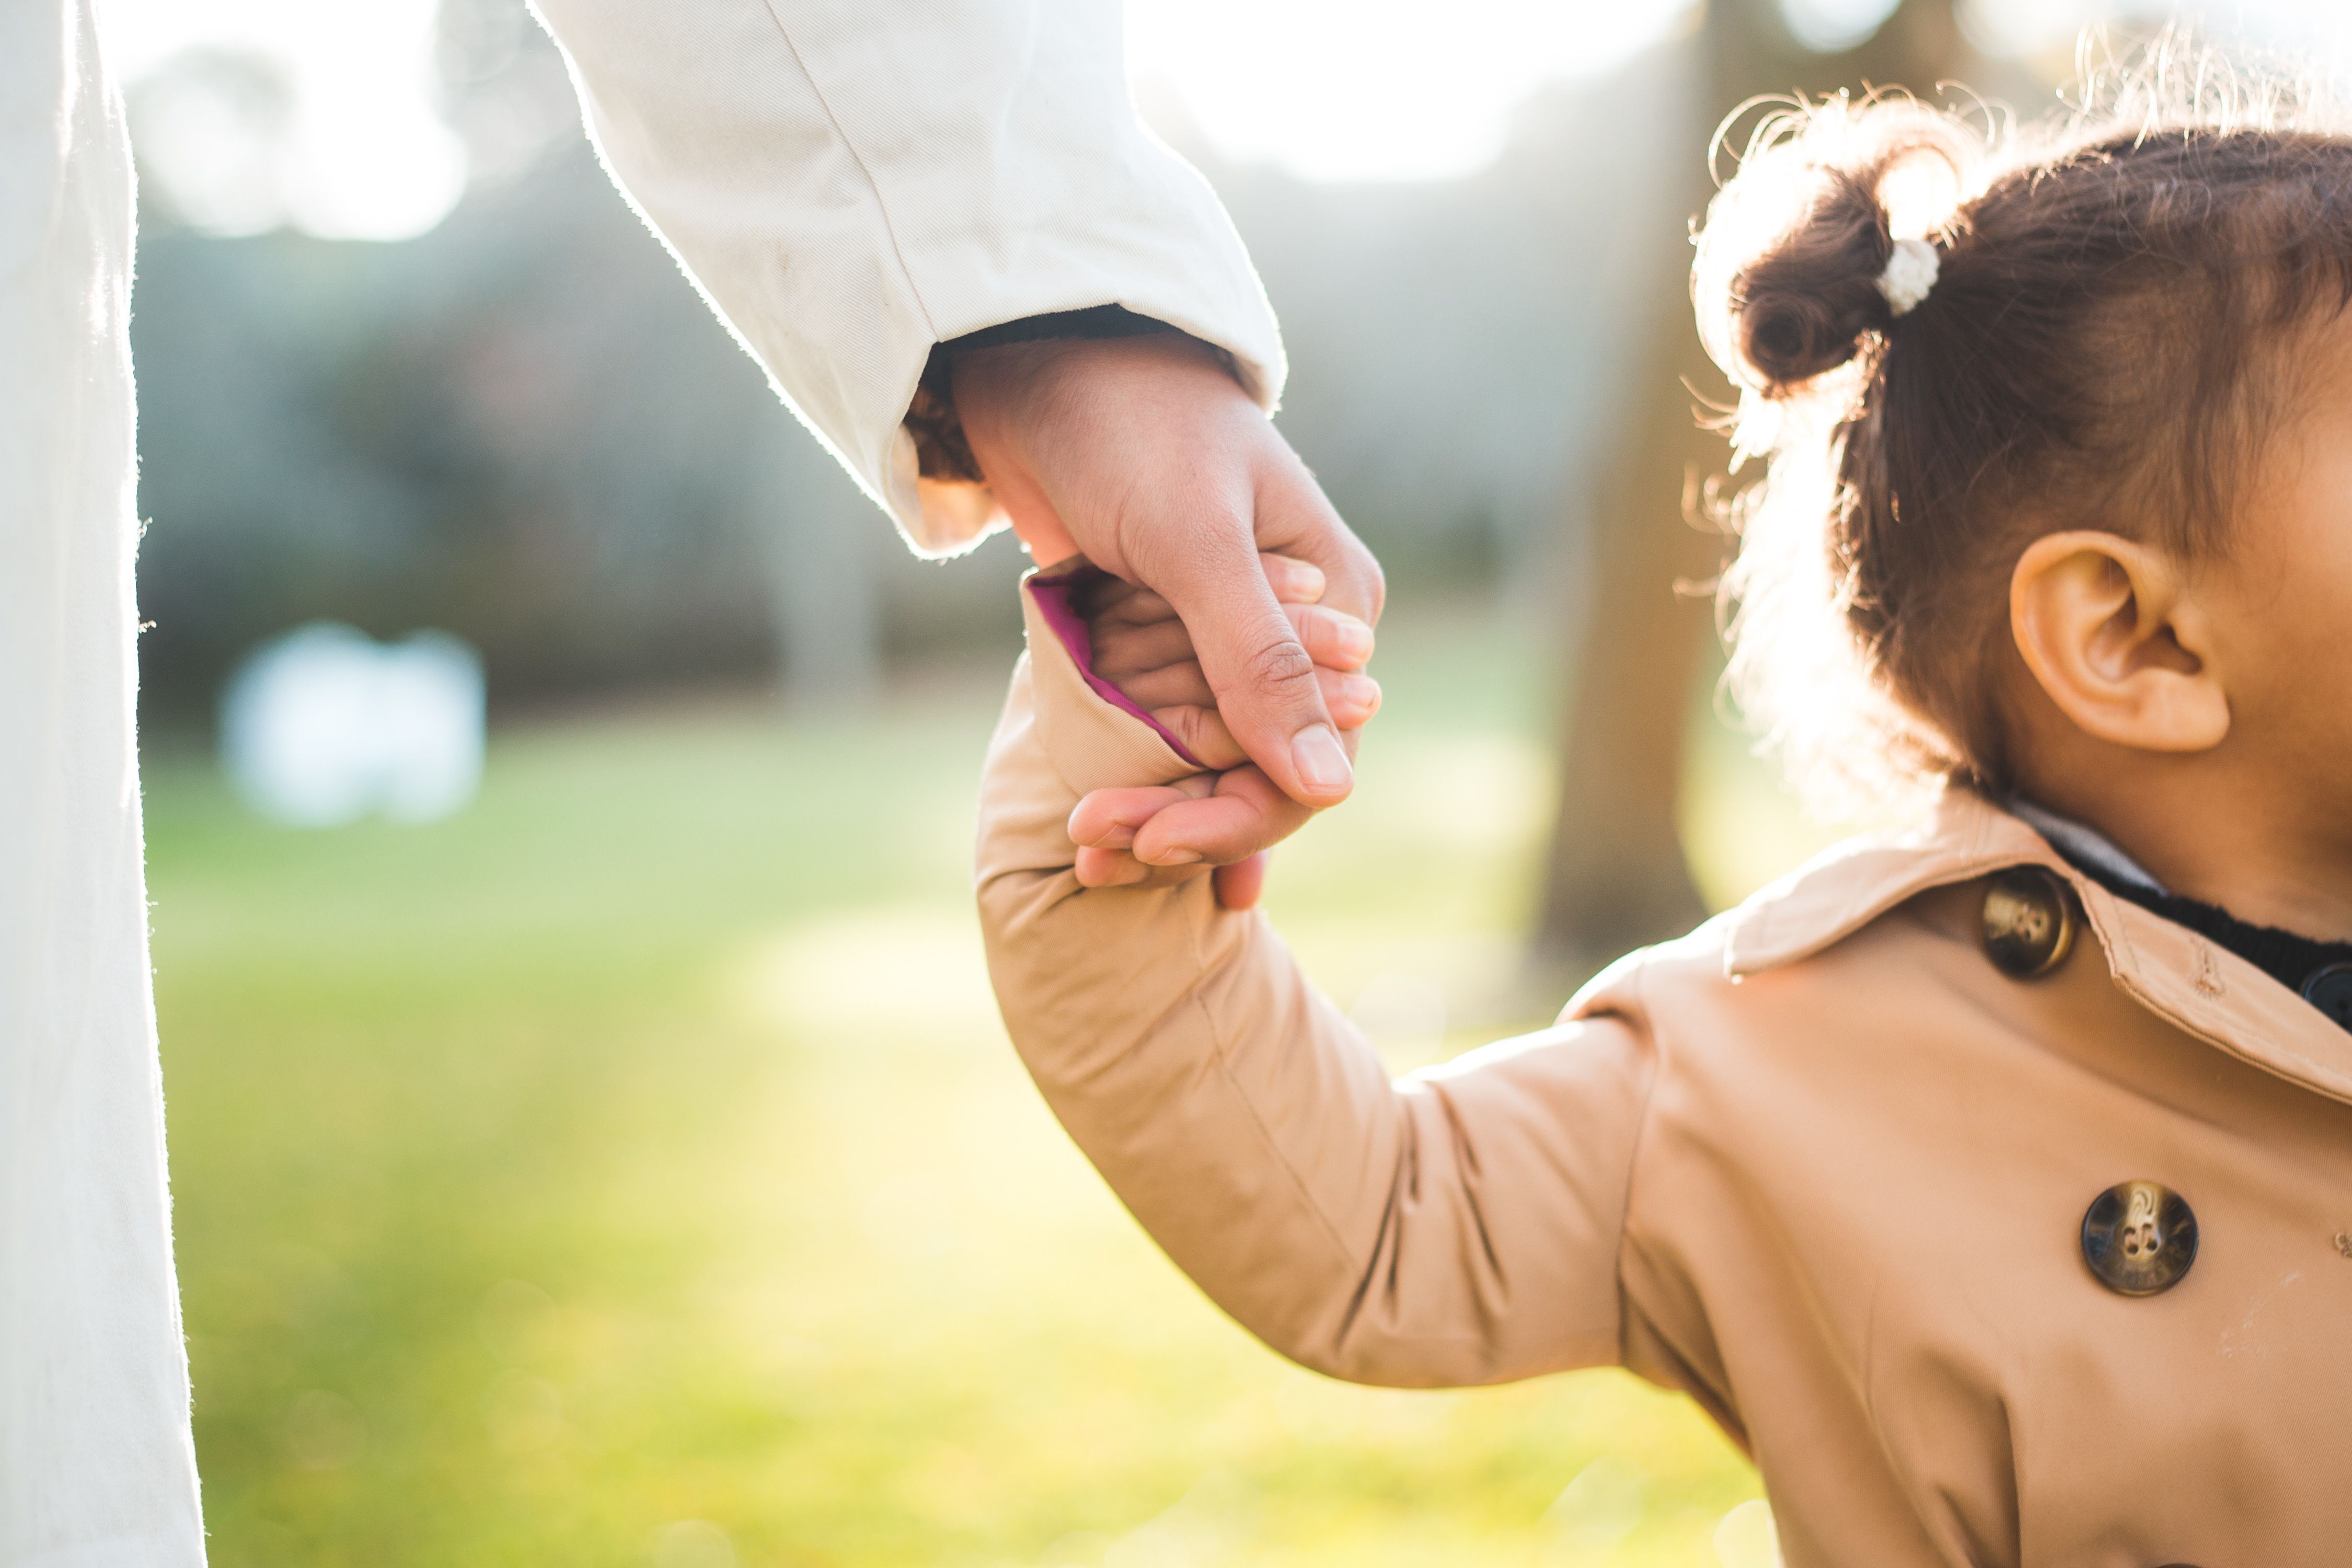 Parent holding child's hand